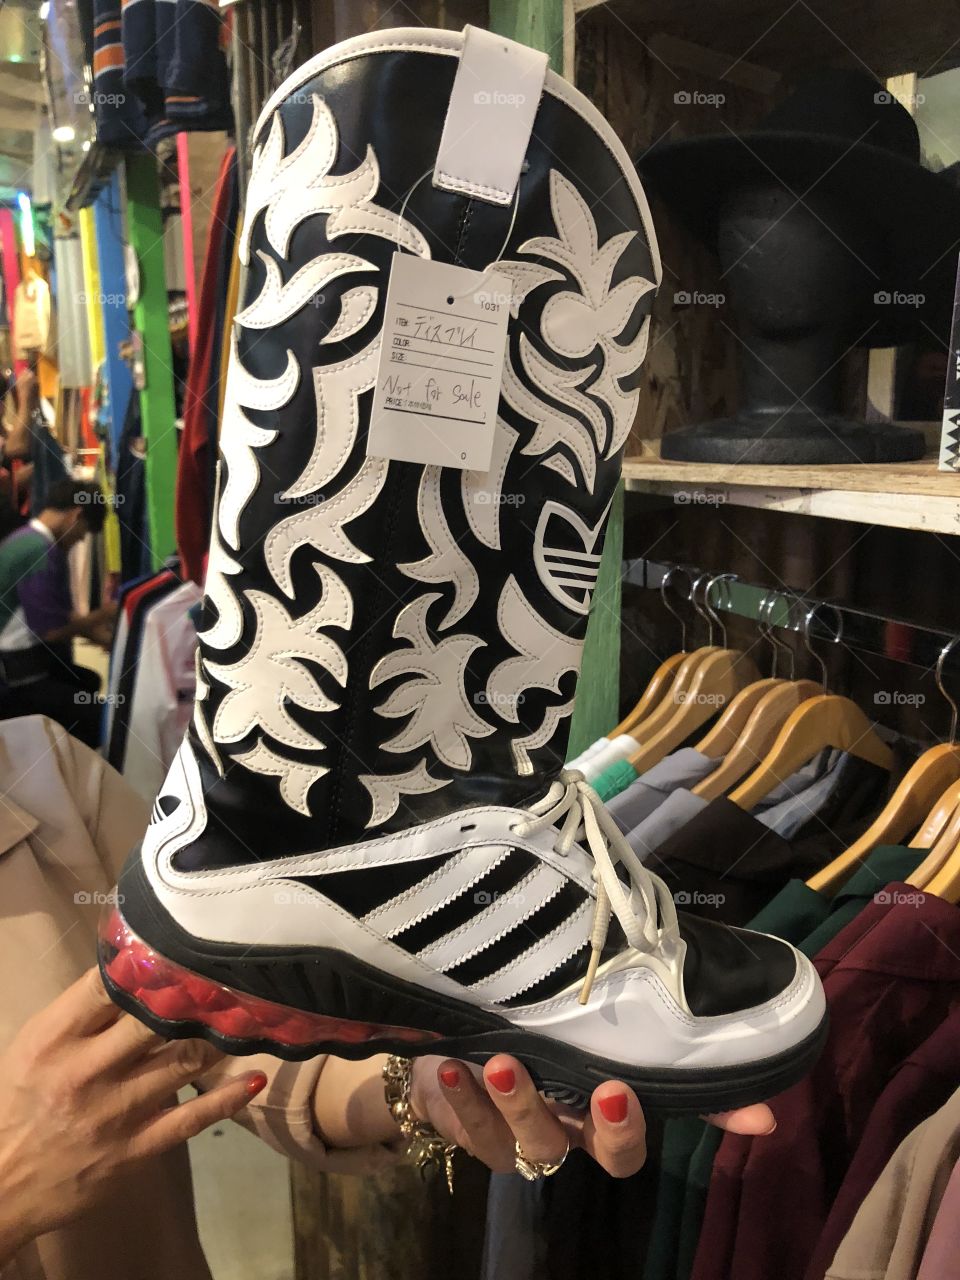 Adidas Jango boots